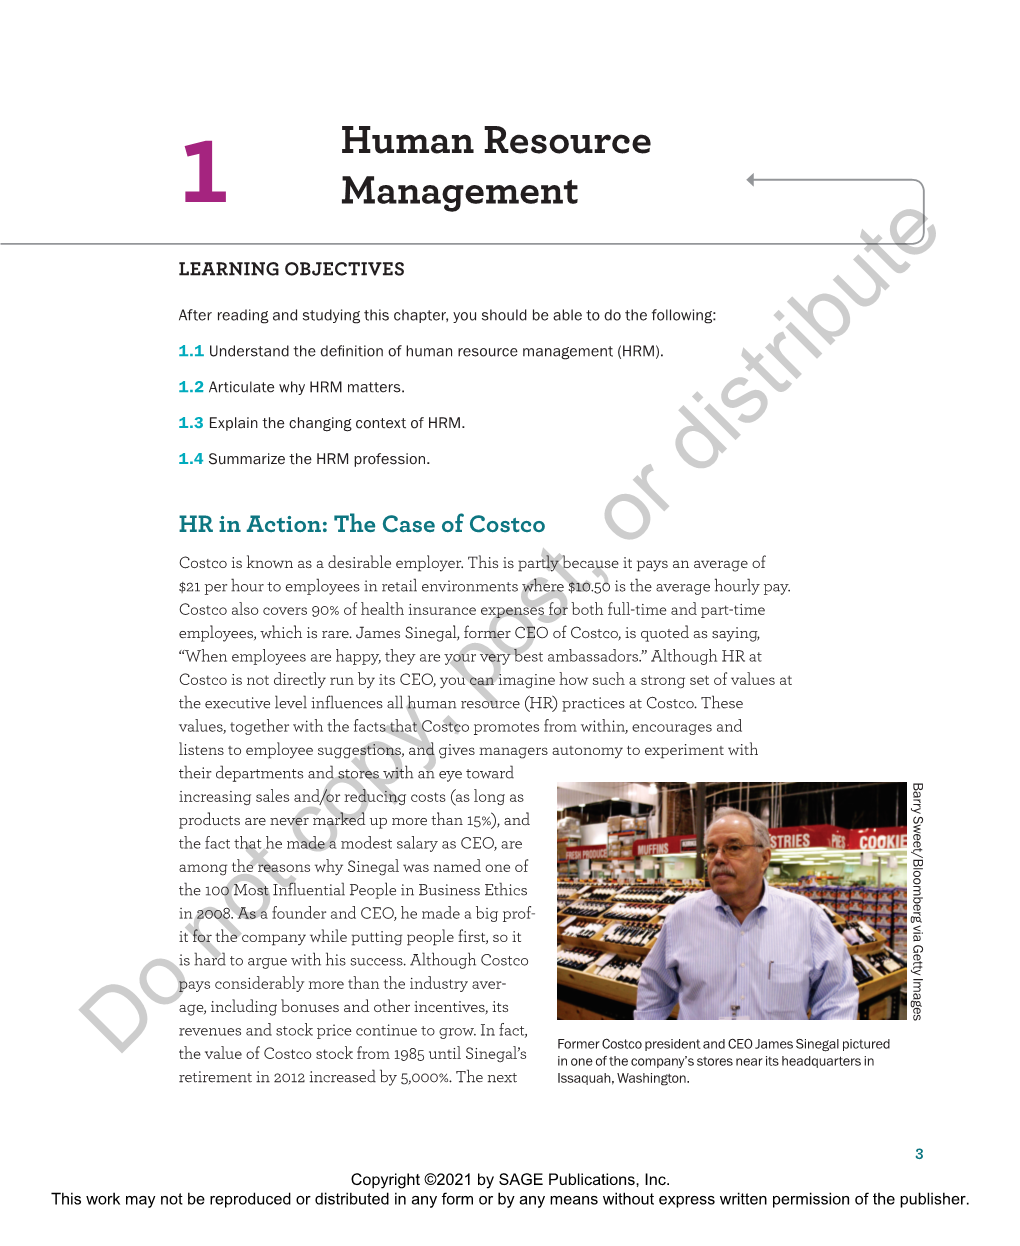 Chapter 1. Human Resource Management